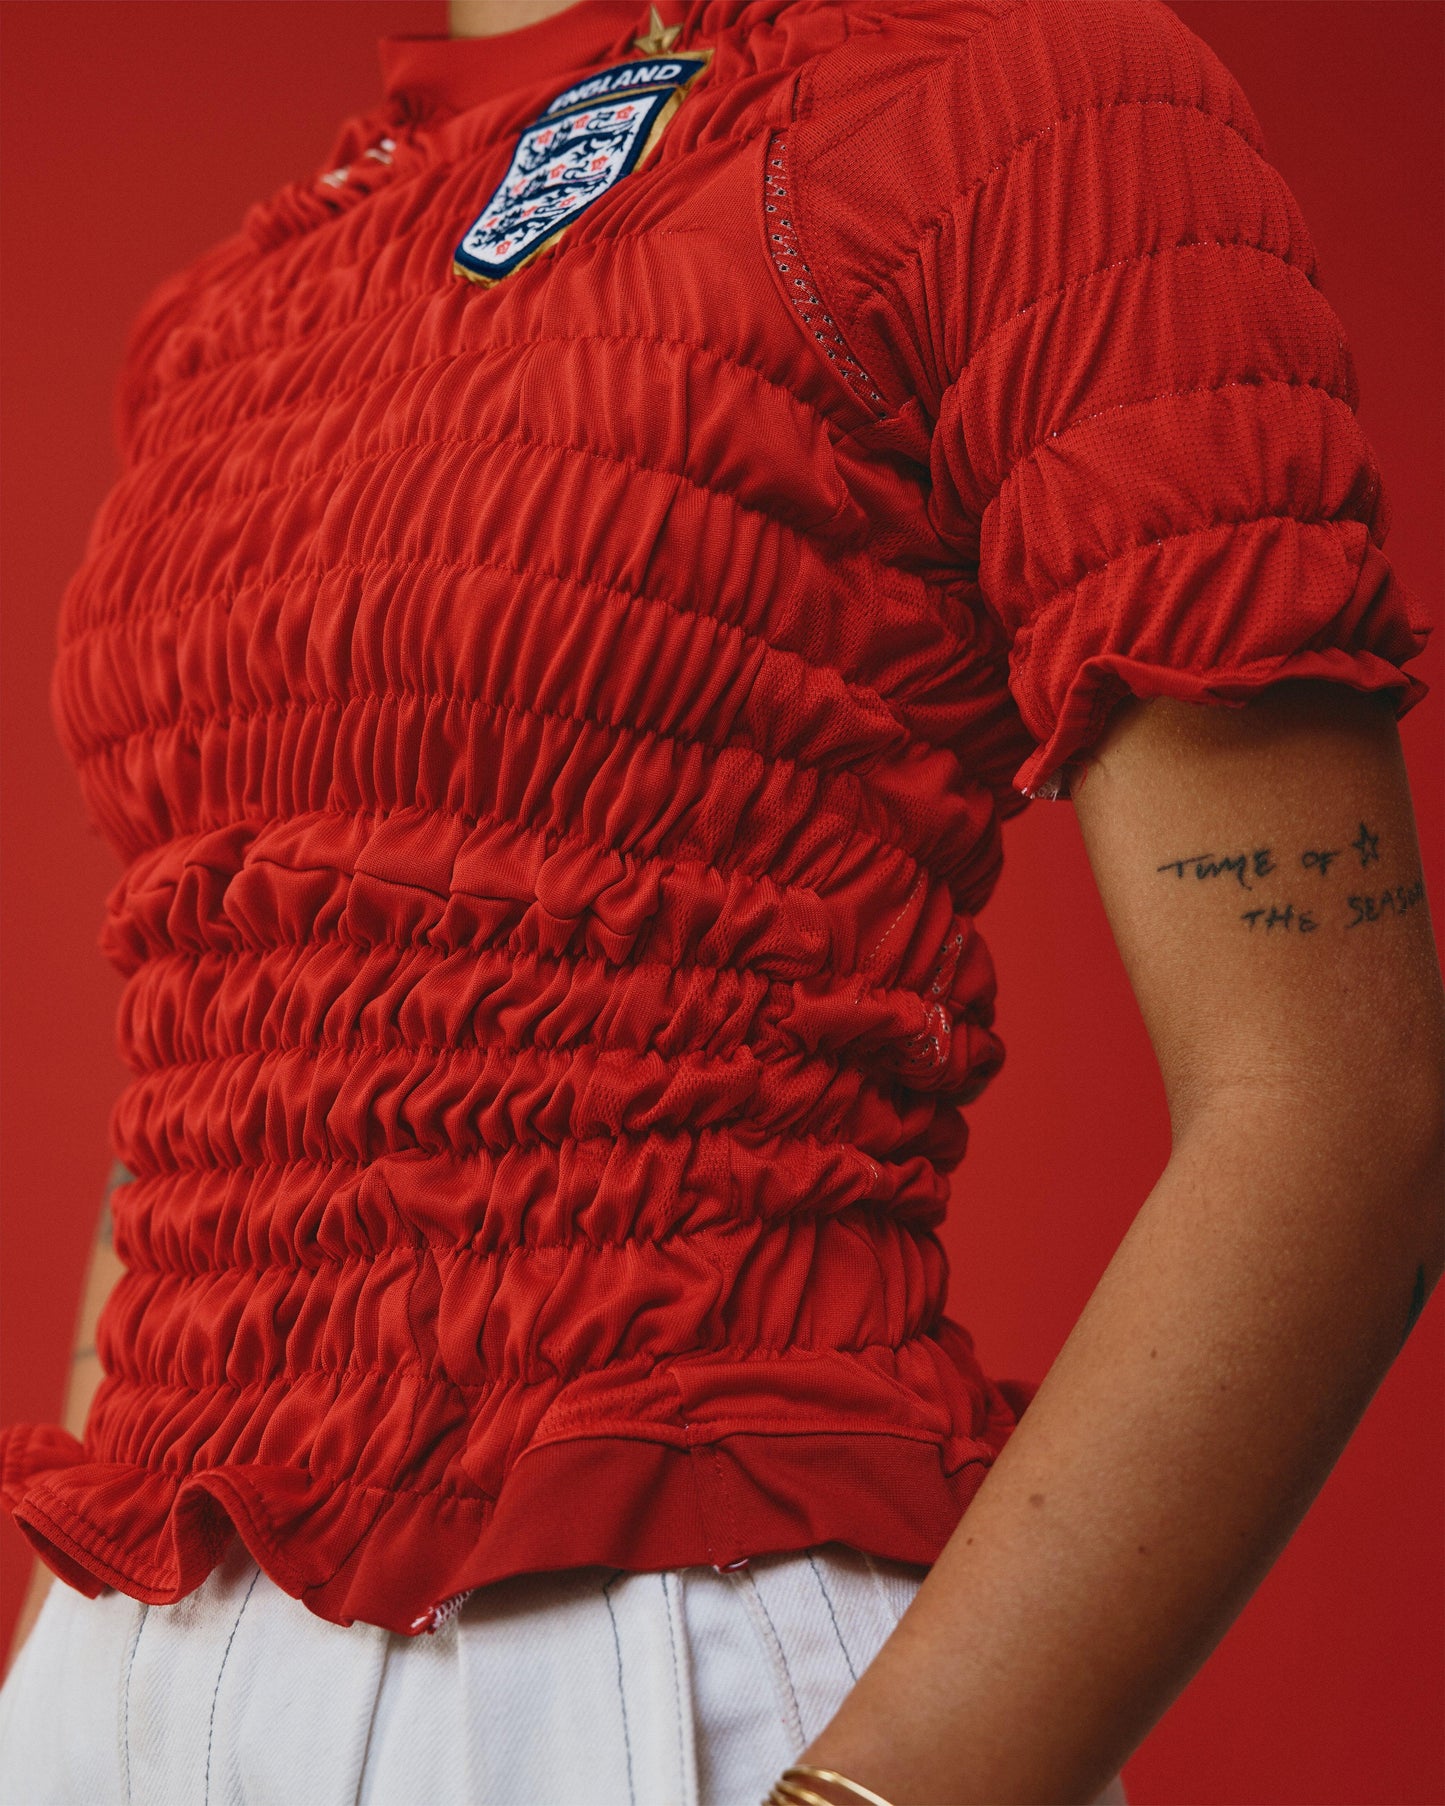 VT Rework : England x Umbro Red Shirred Top